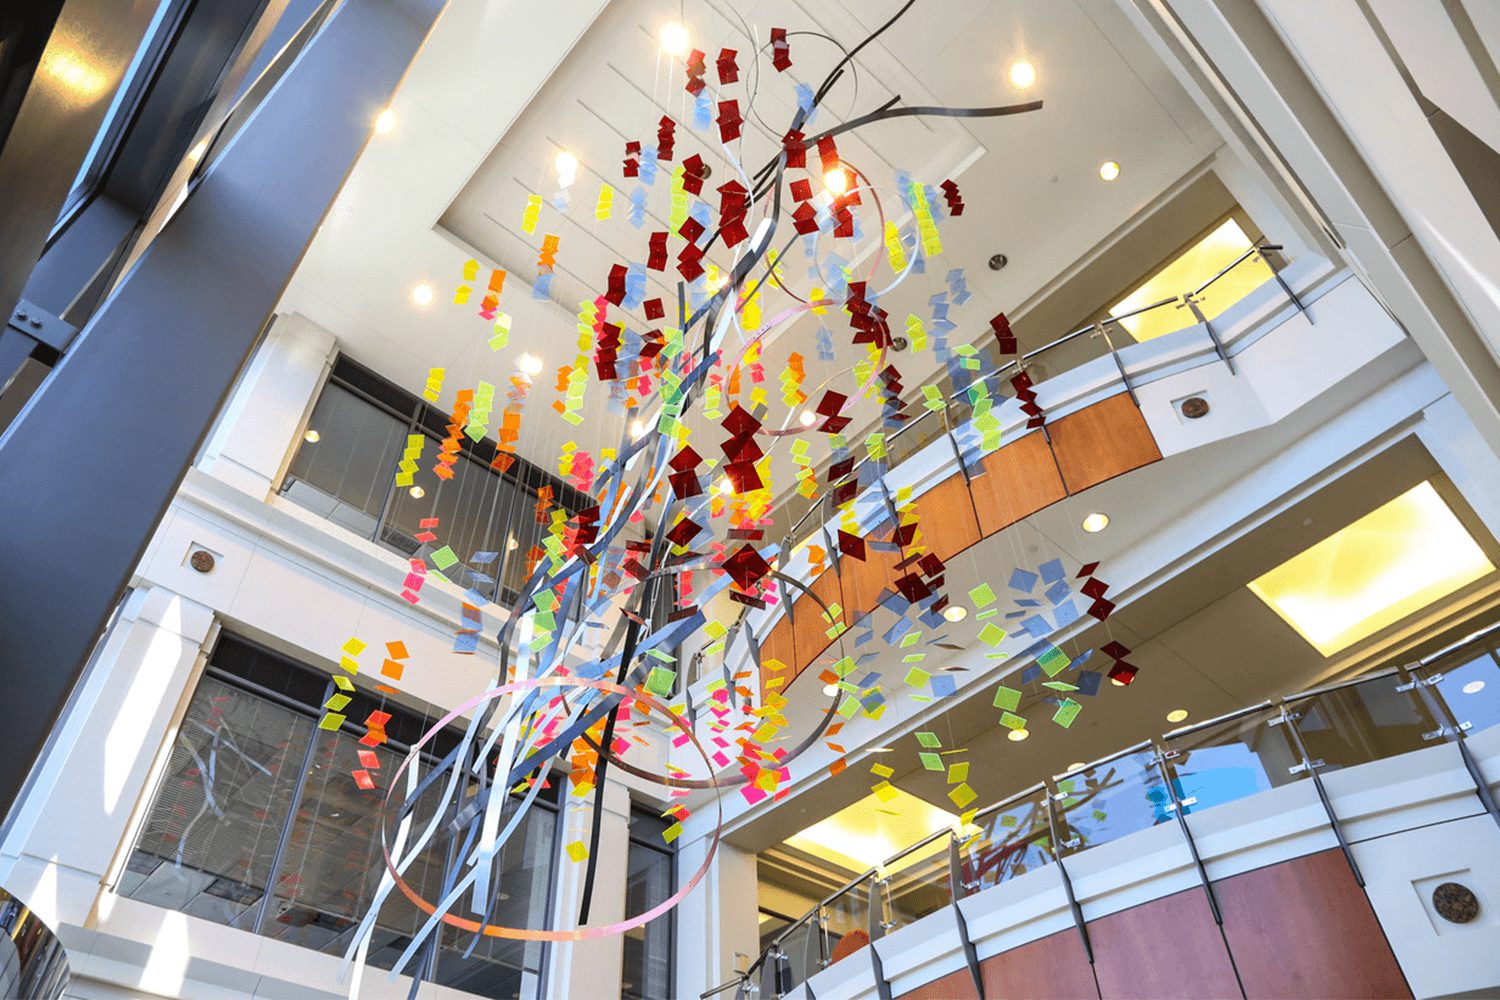 Vibrant hanging sculpture than spans multiple levels